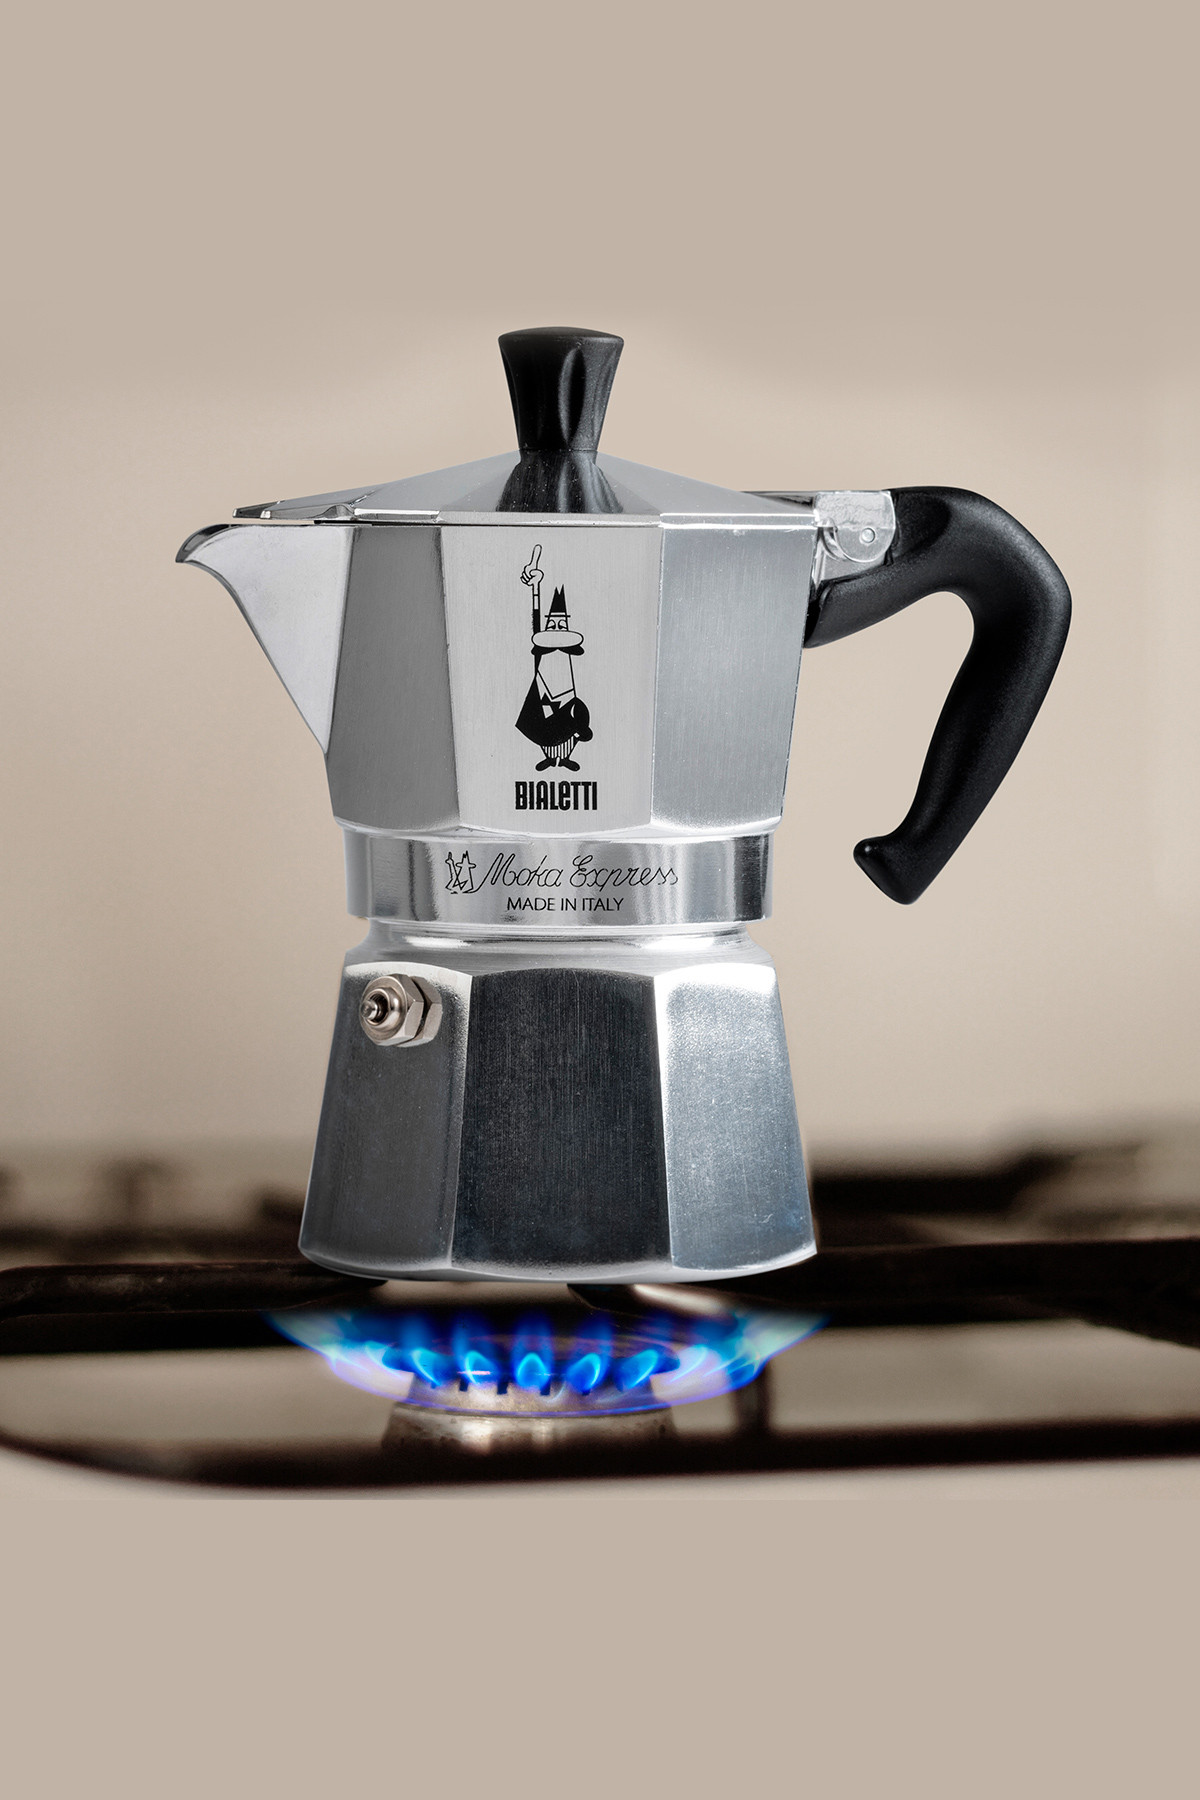 https://media.heirol.fi/587296_7/1200/espresso-pan-6-cups-moka-express_.jpg